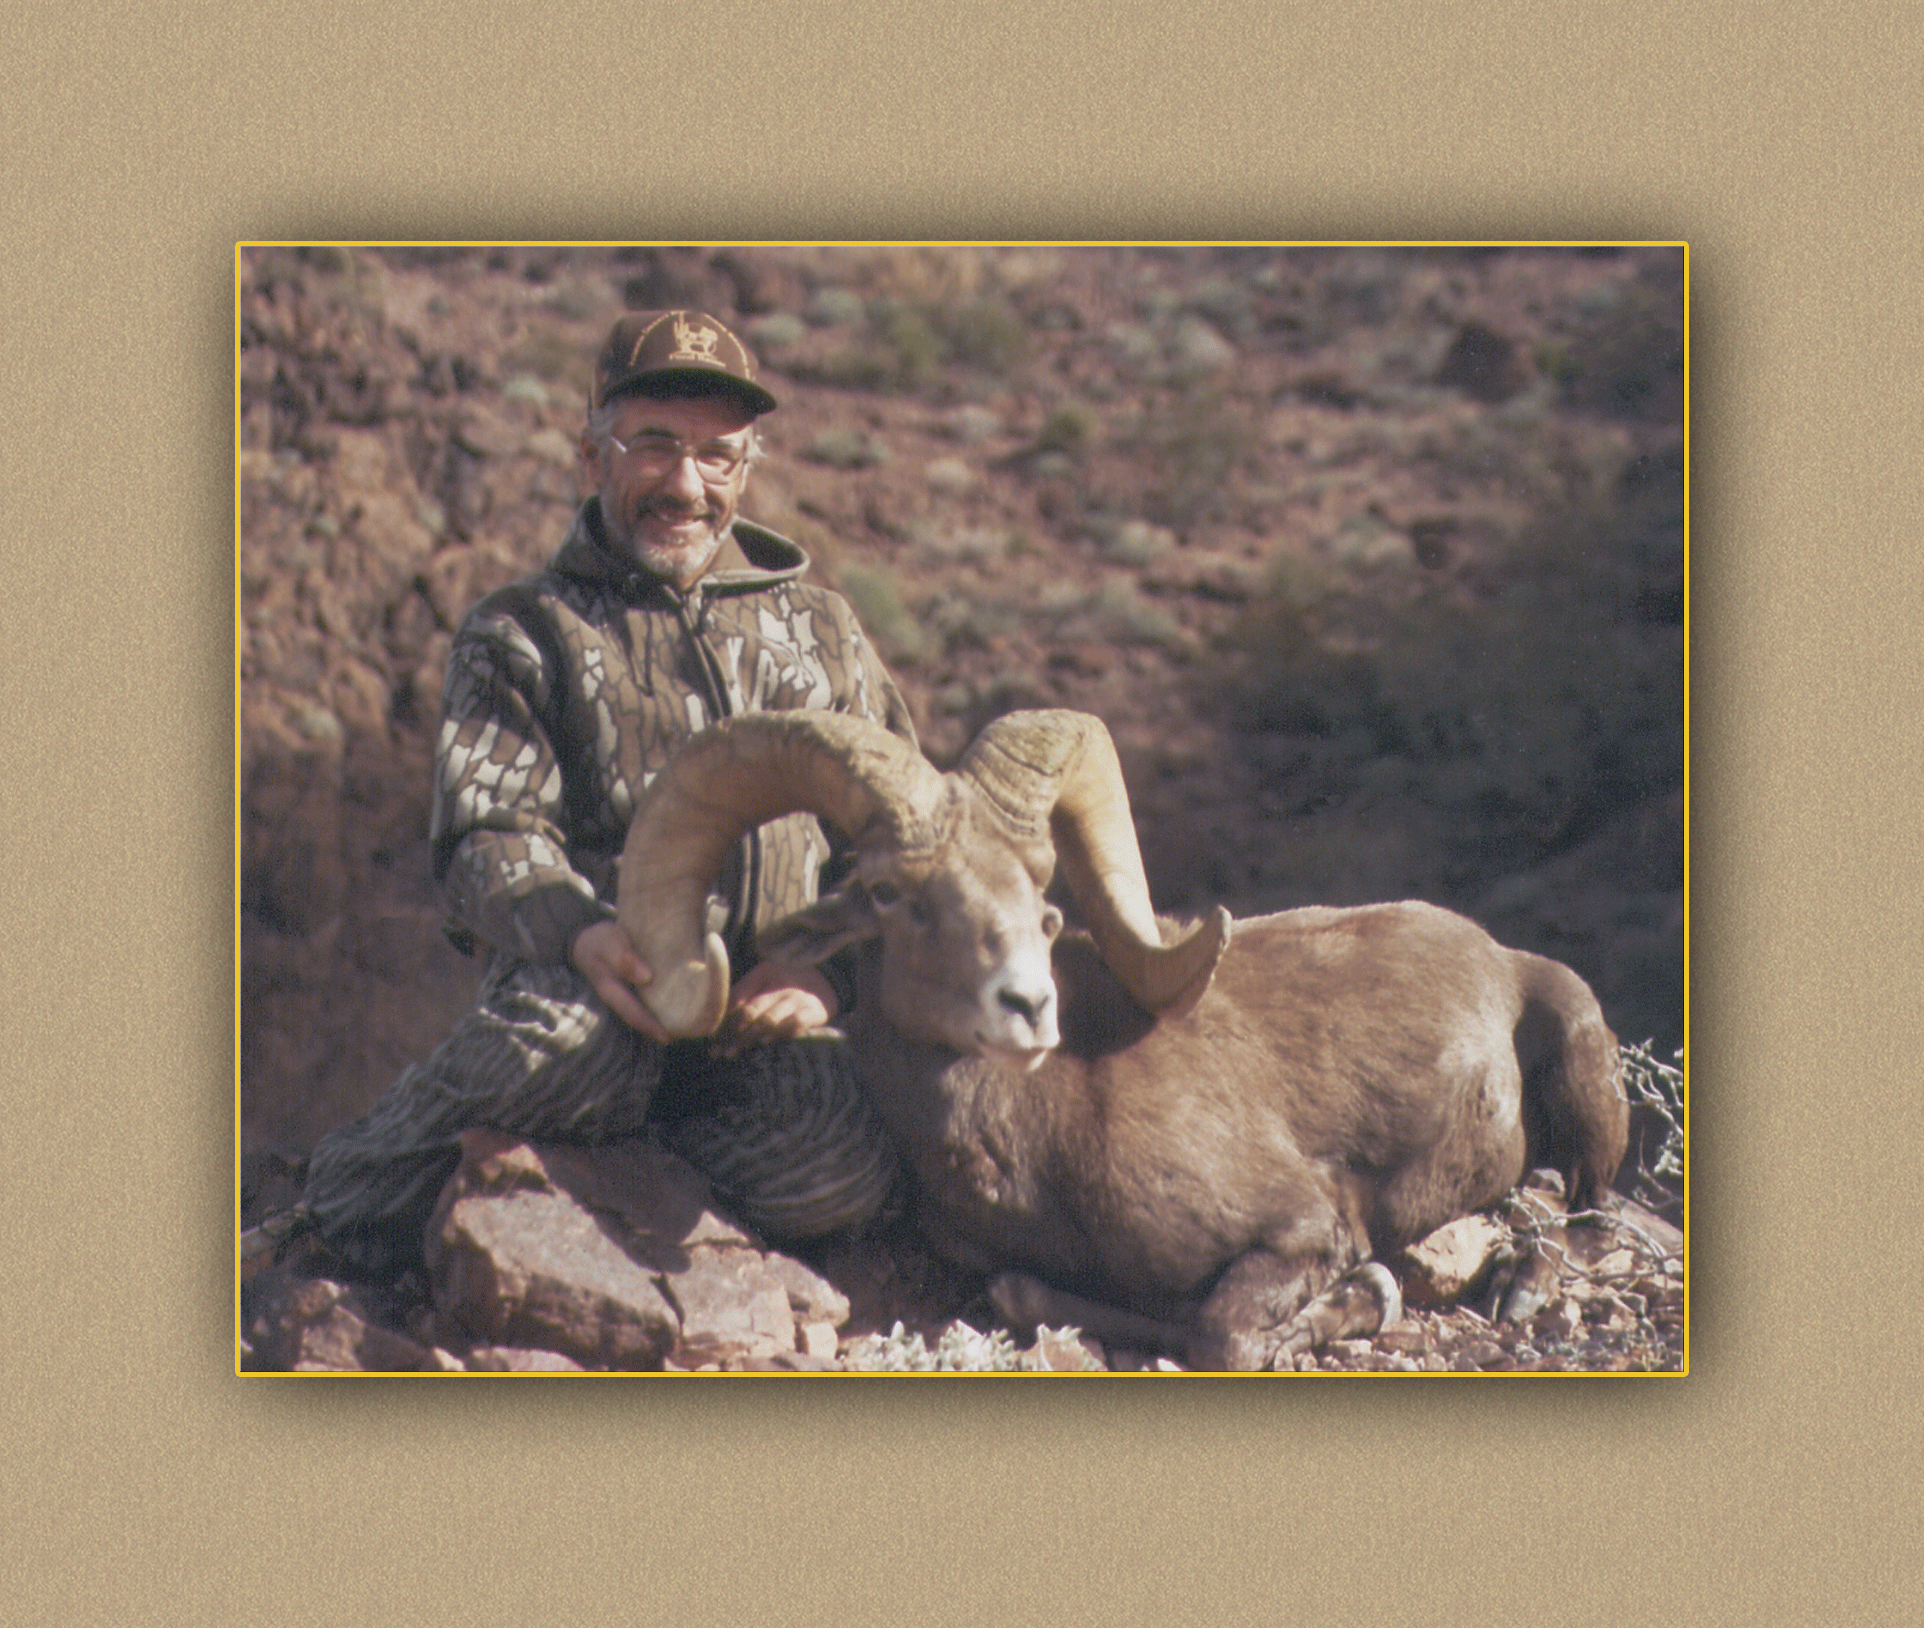 arizona hunting yellowhorn arizona bighorn sheep guiding outfitting deer elk antelope photography